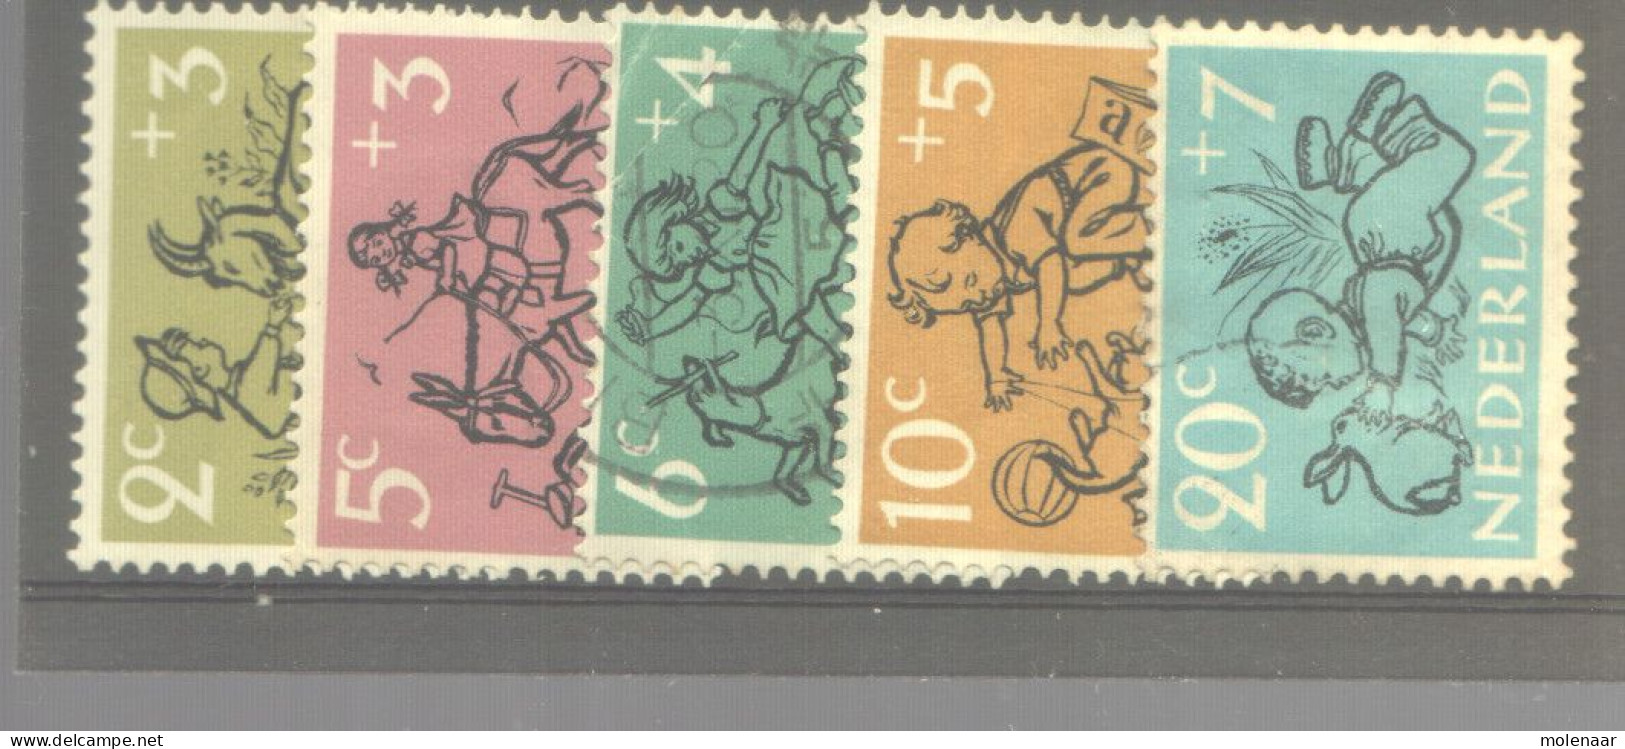 Postzegels > Europa > Nederland > Periode 1949-1980 (Juliana) > 1949-59 > 596-600 Gebruikt (11779) - Usati